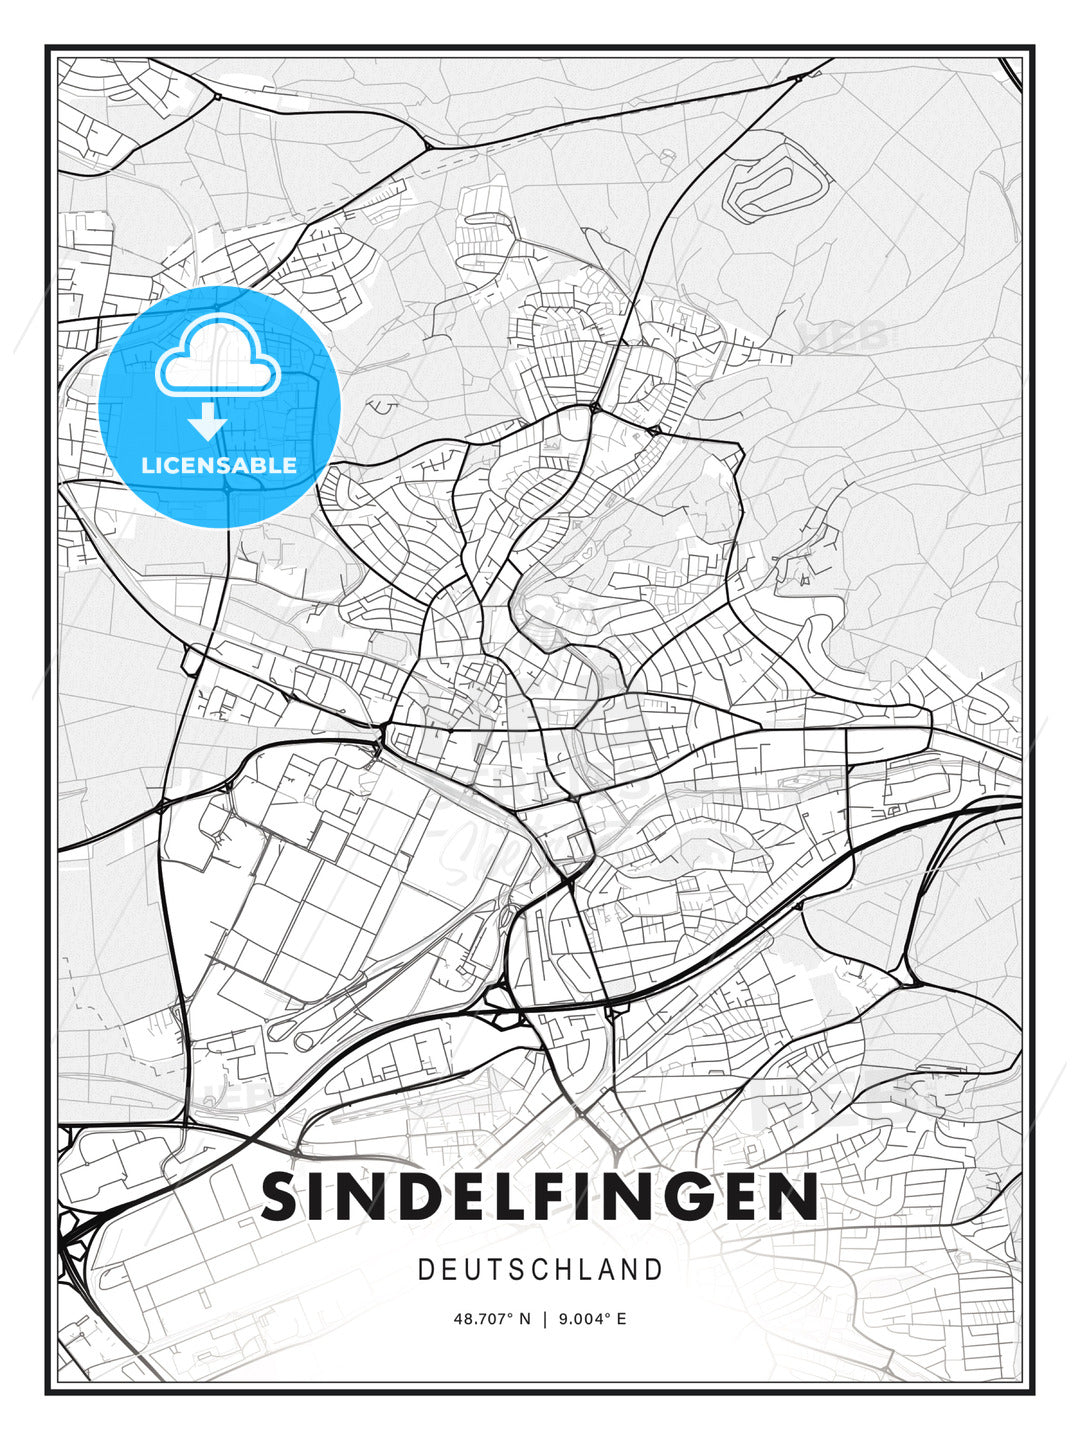 Sindelfingen, Germany, Modern Print Template in Various Formats - HEBSTREITS Sketches